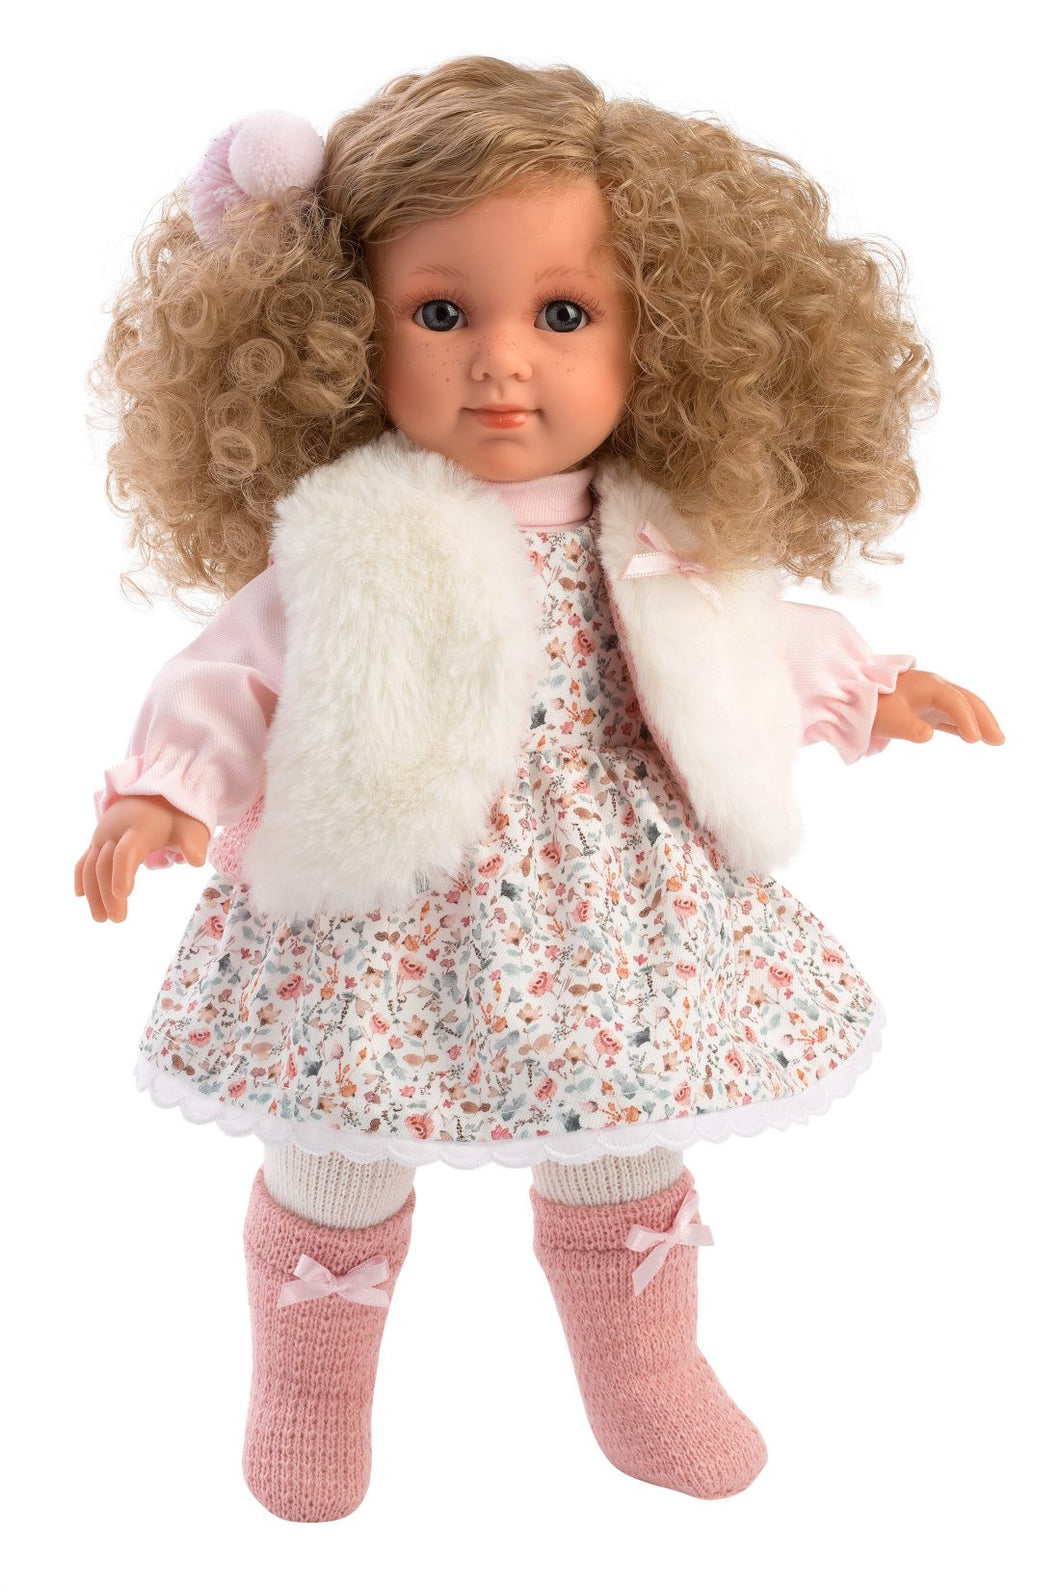 Elena doll made in spain